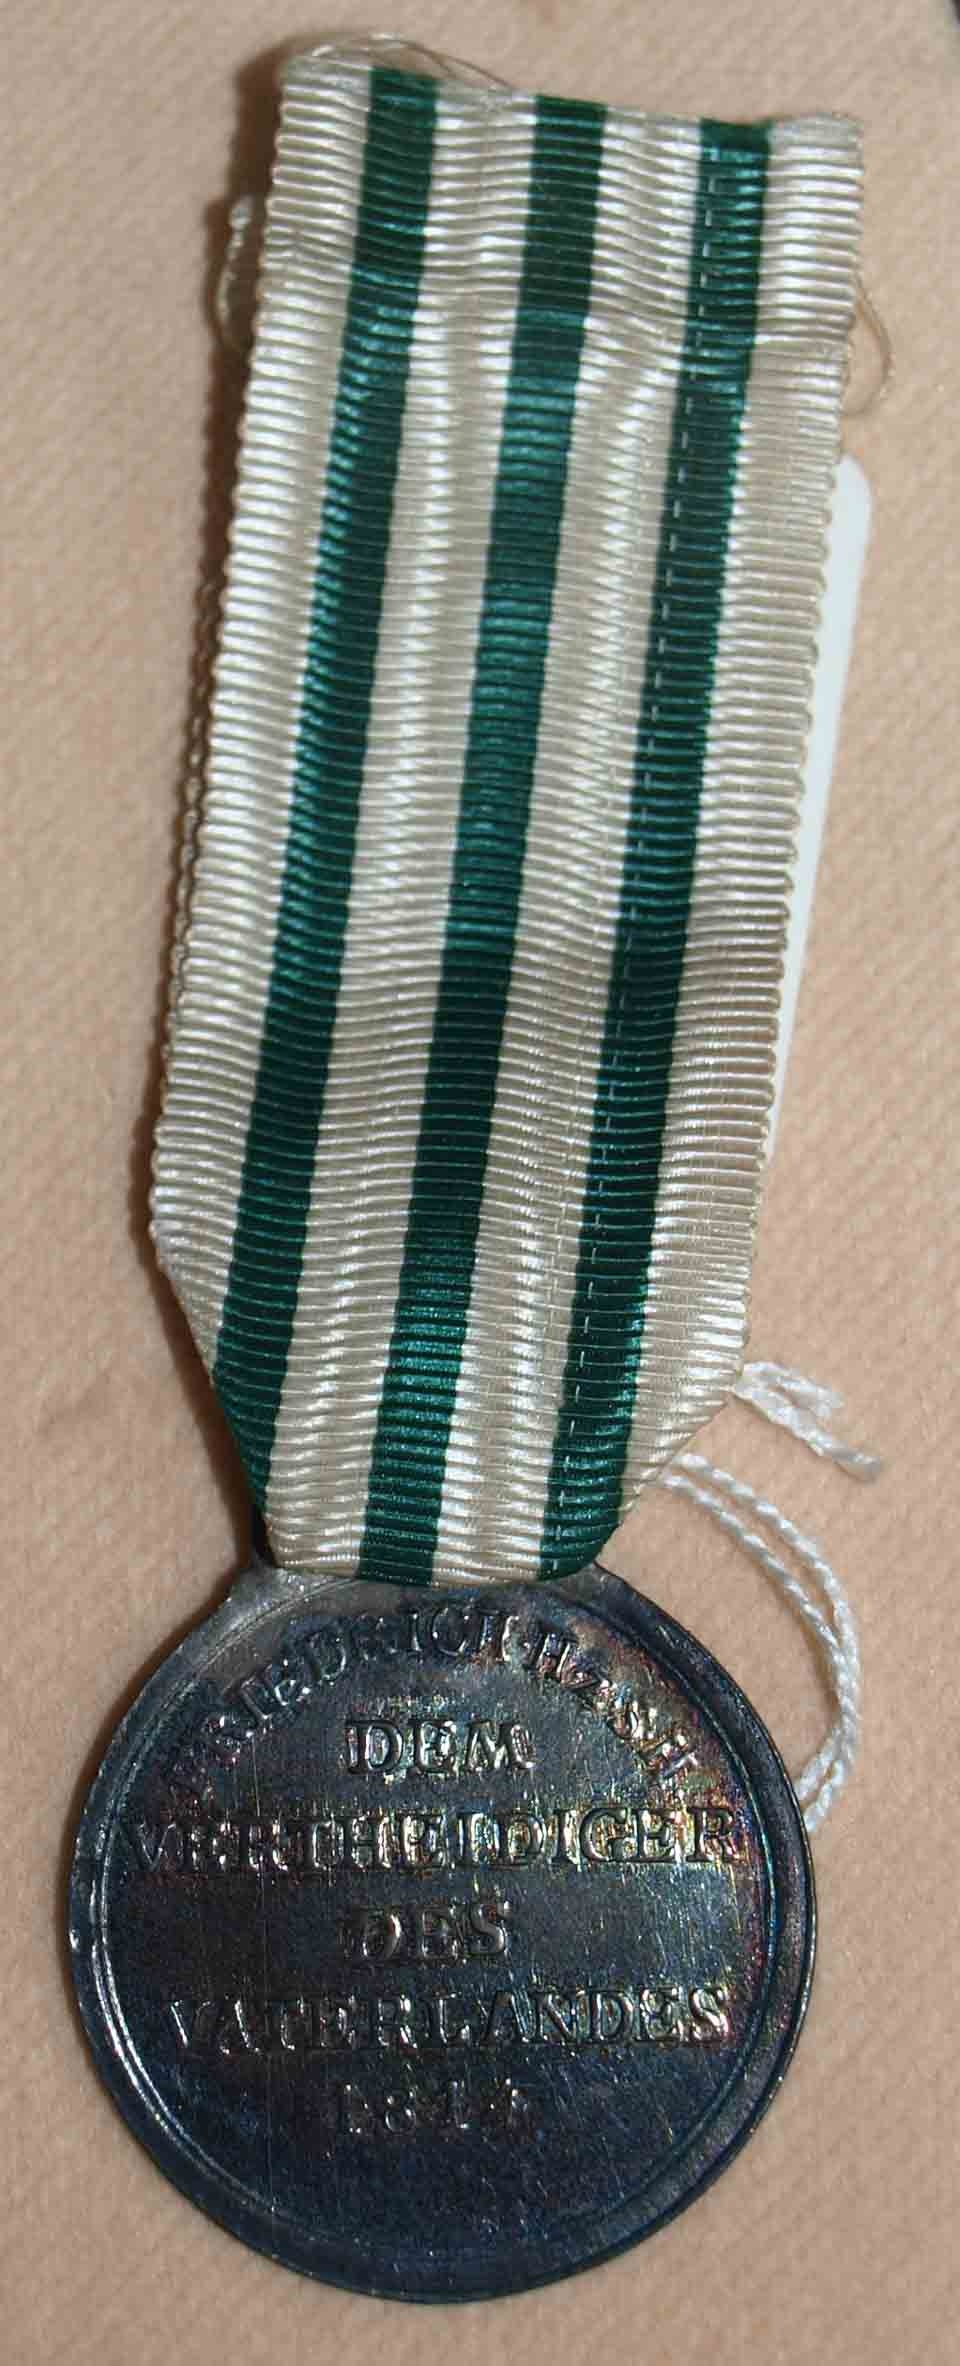 Kriegsgedenkmünze oder Campagne-Medaille, Sachsen-Hildburghausen, 1814/15 (Museum Weißenfels - Schloss Neu-Augustusburg CC BY-NC-SA)